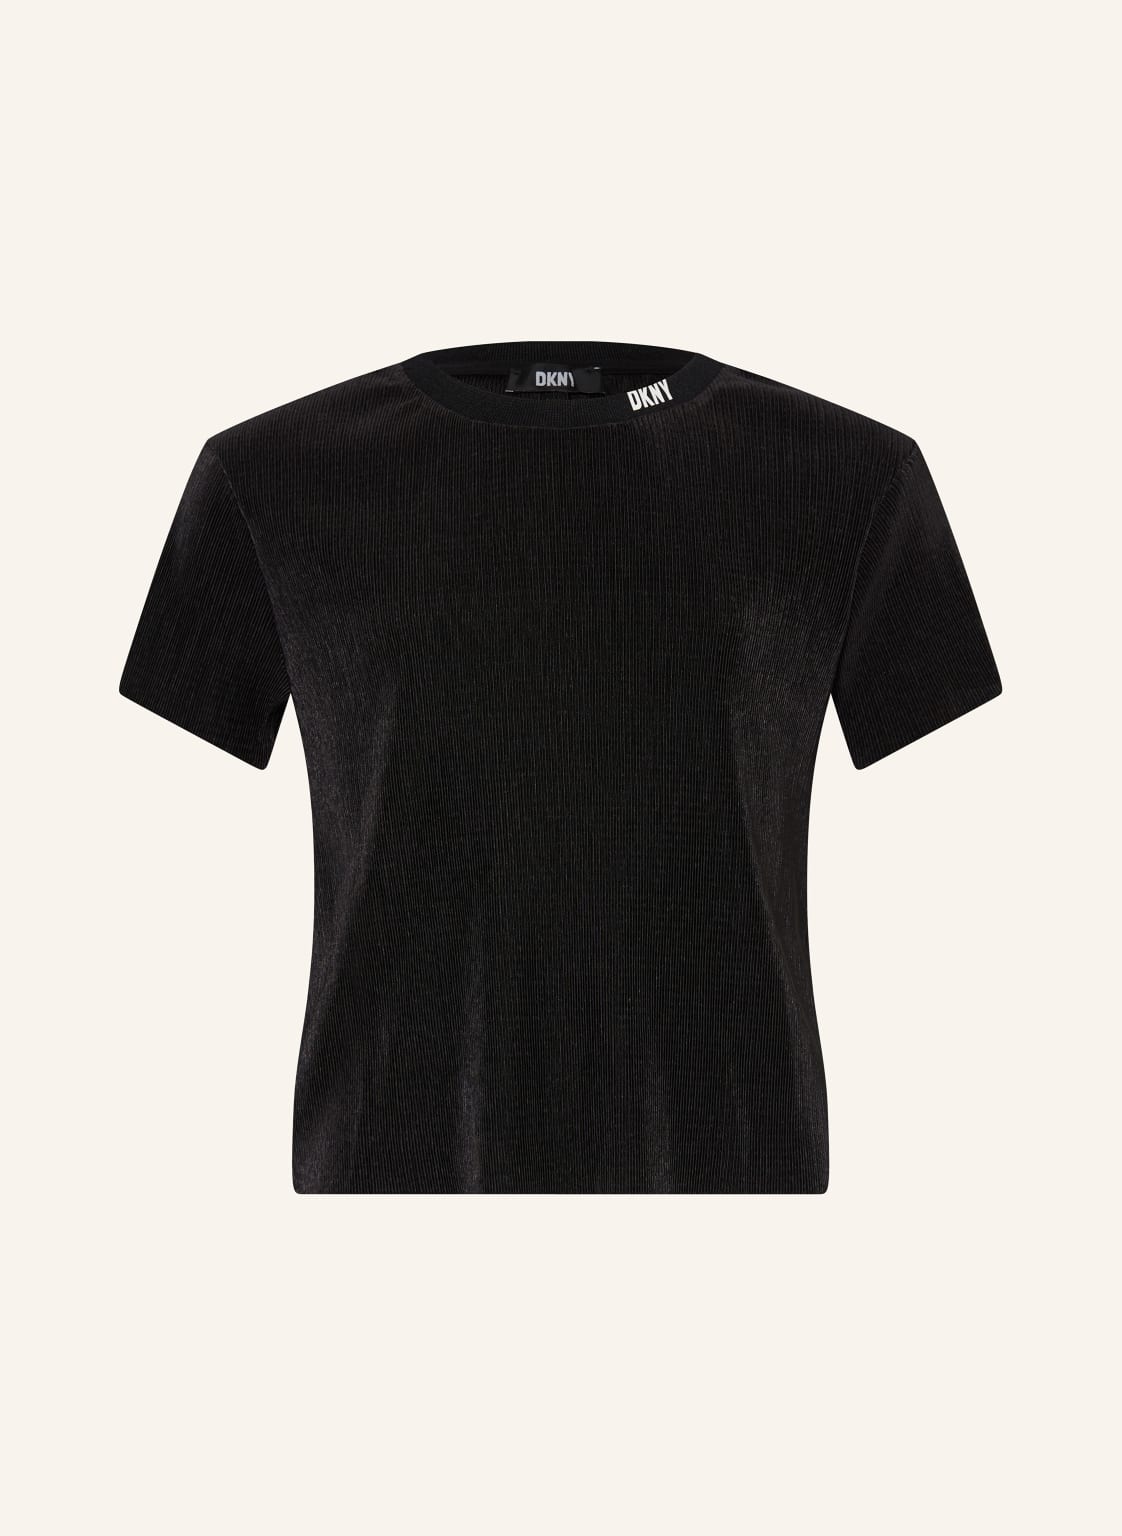 Dkny Cropped-Shirt schwarz von DKNY